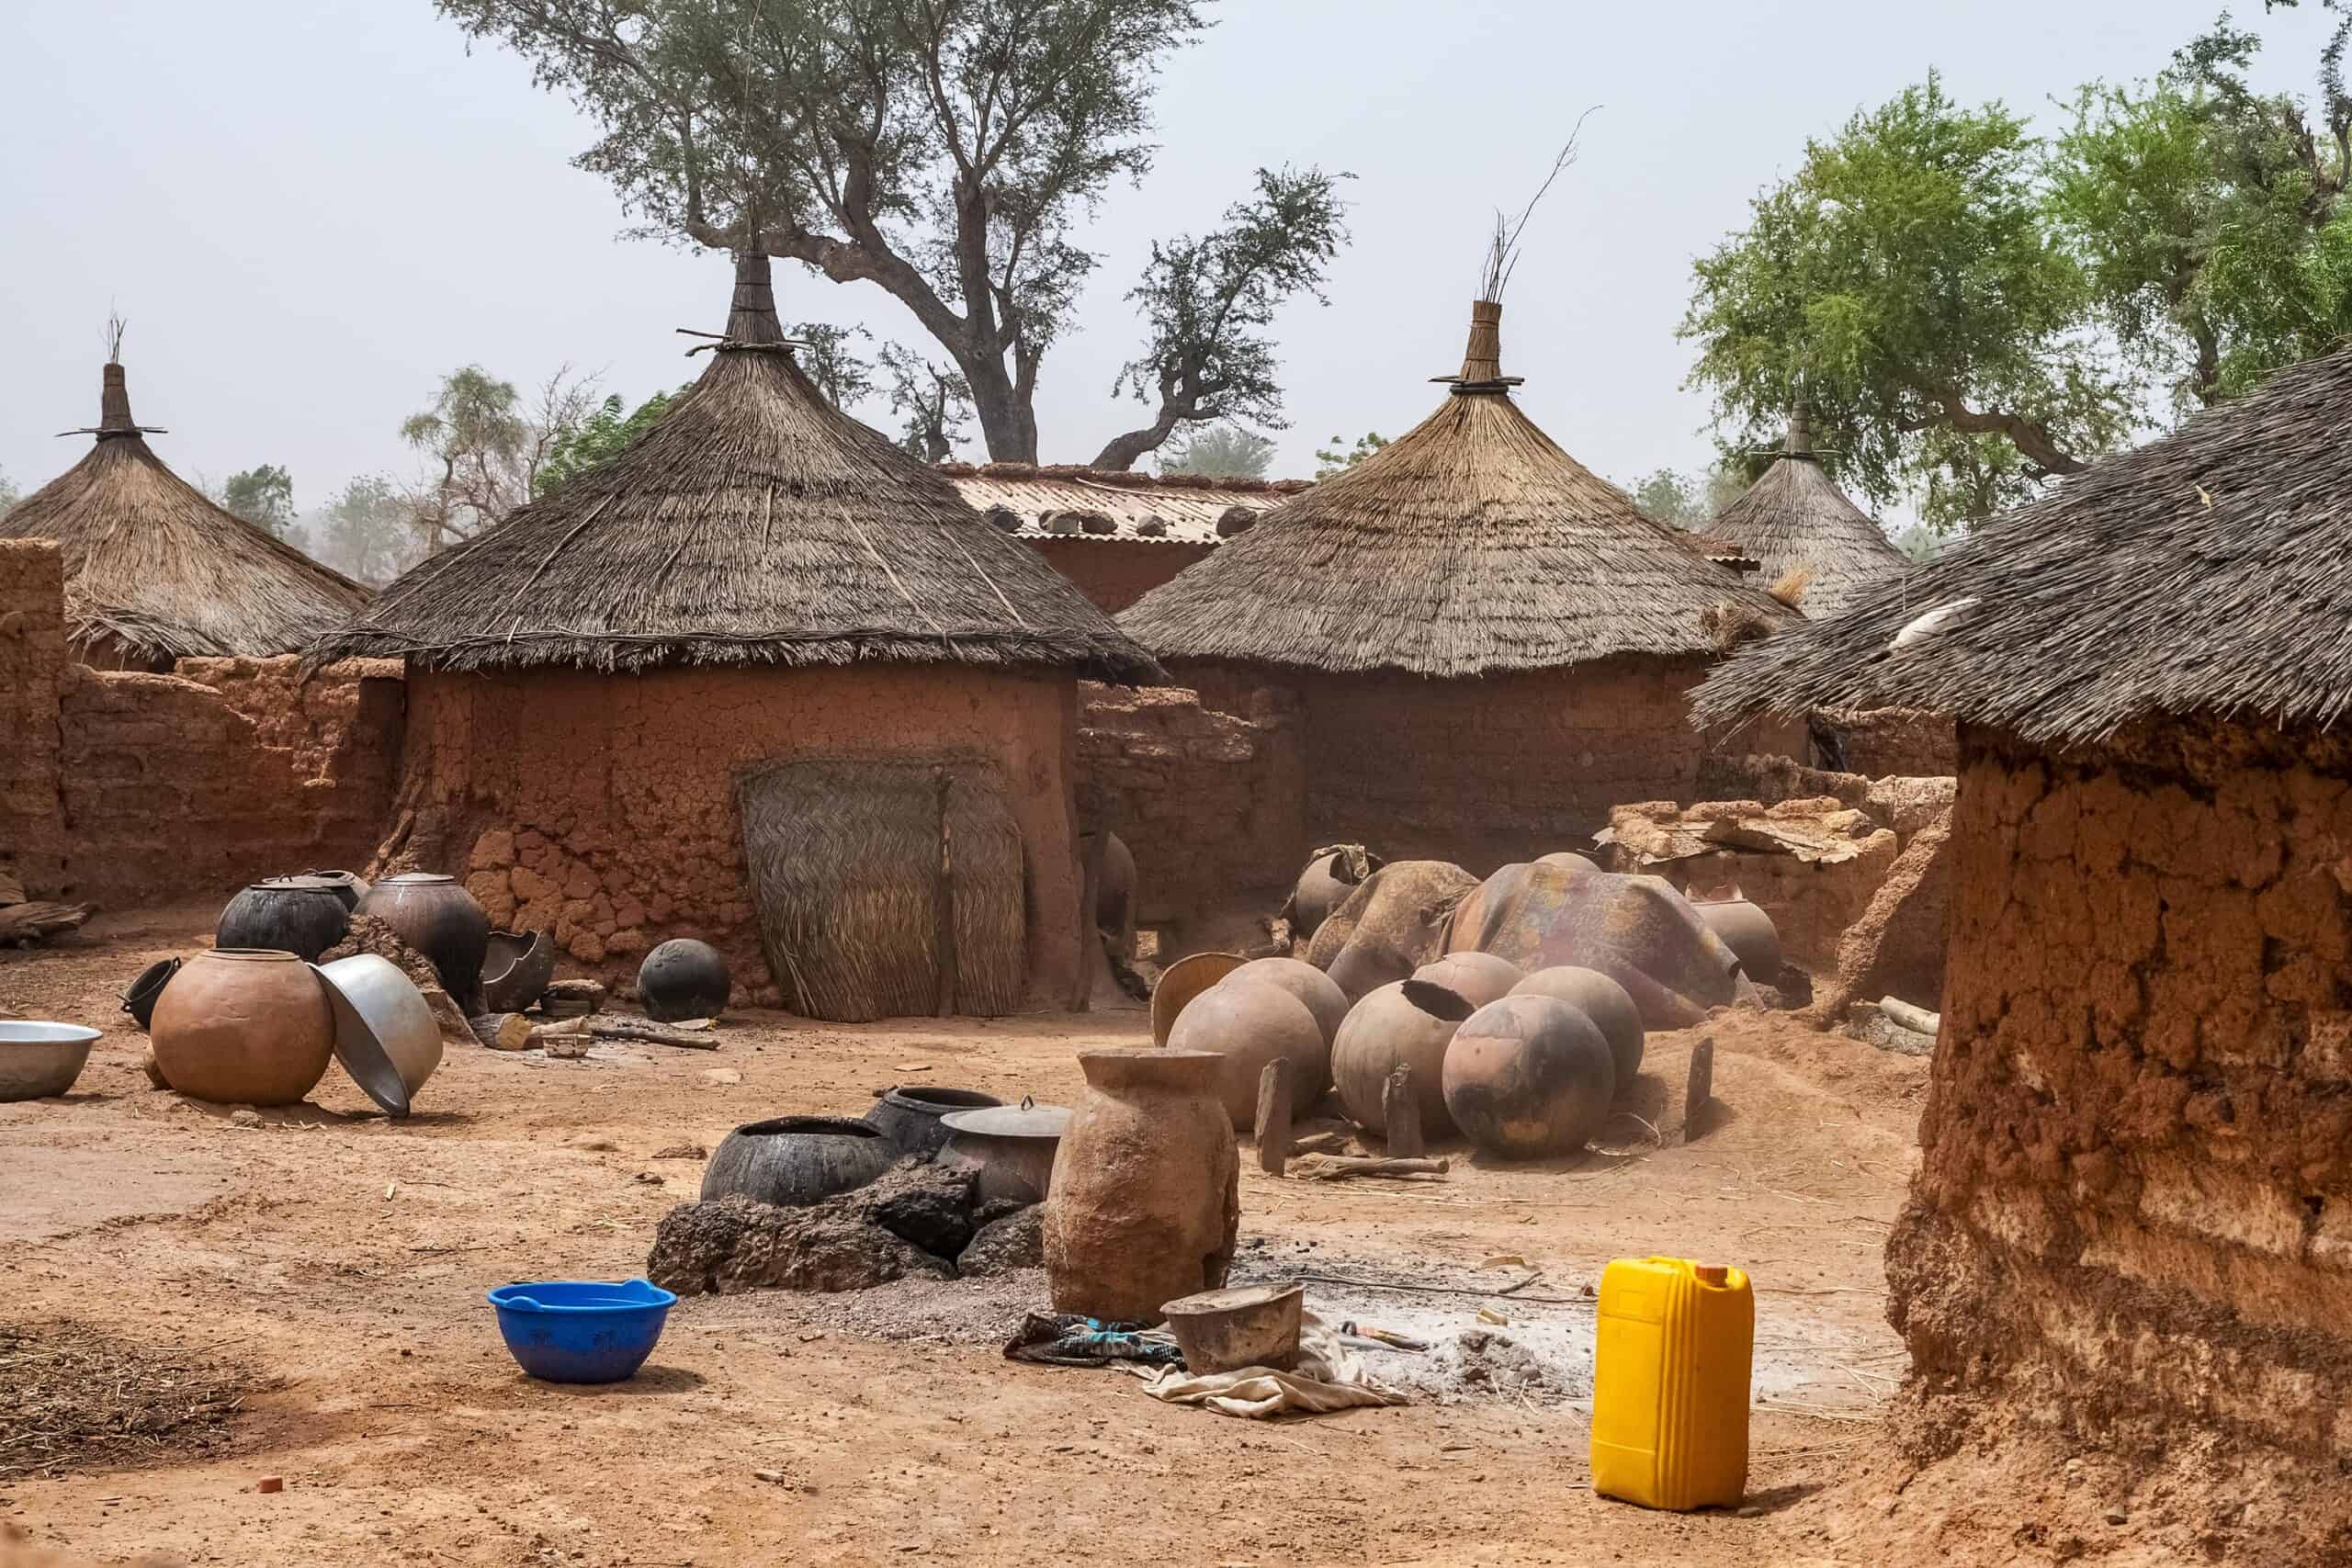 Burkina Faso | Traditional huts, Burkina Faso, West Africa